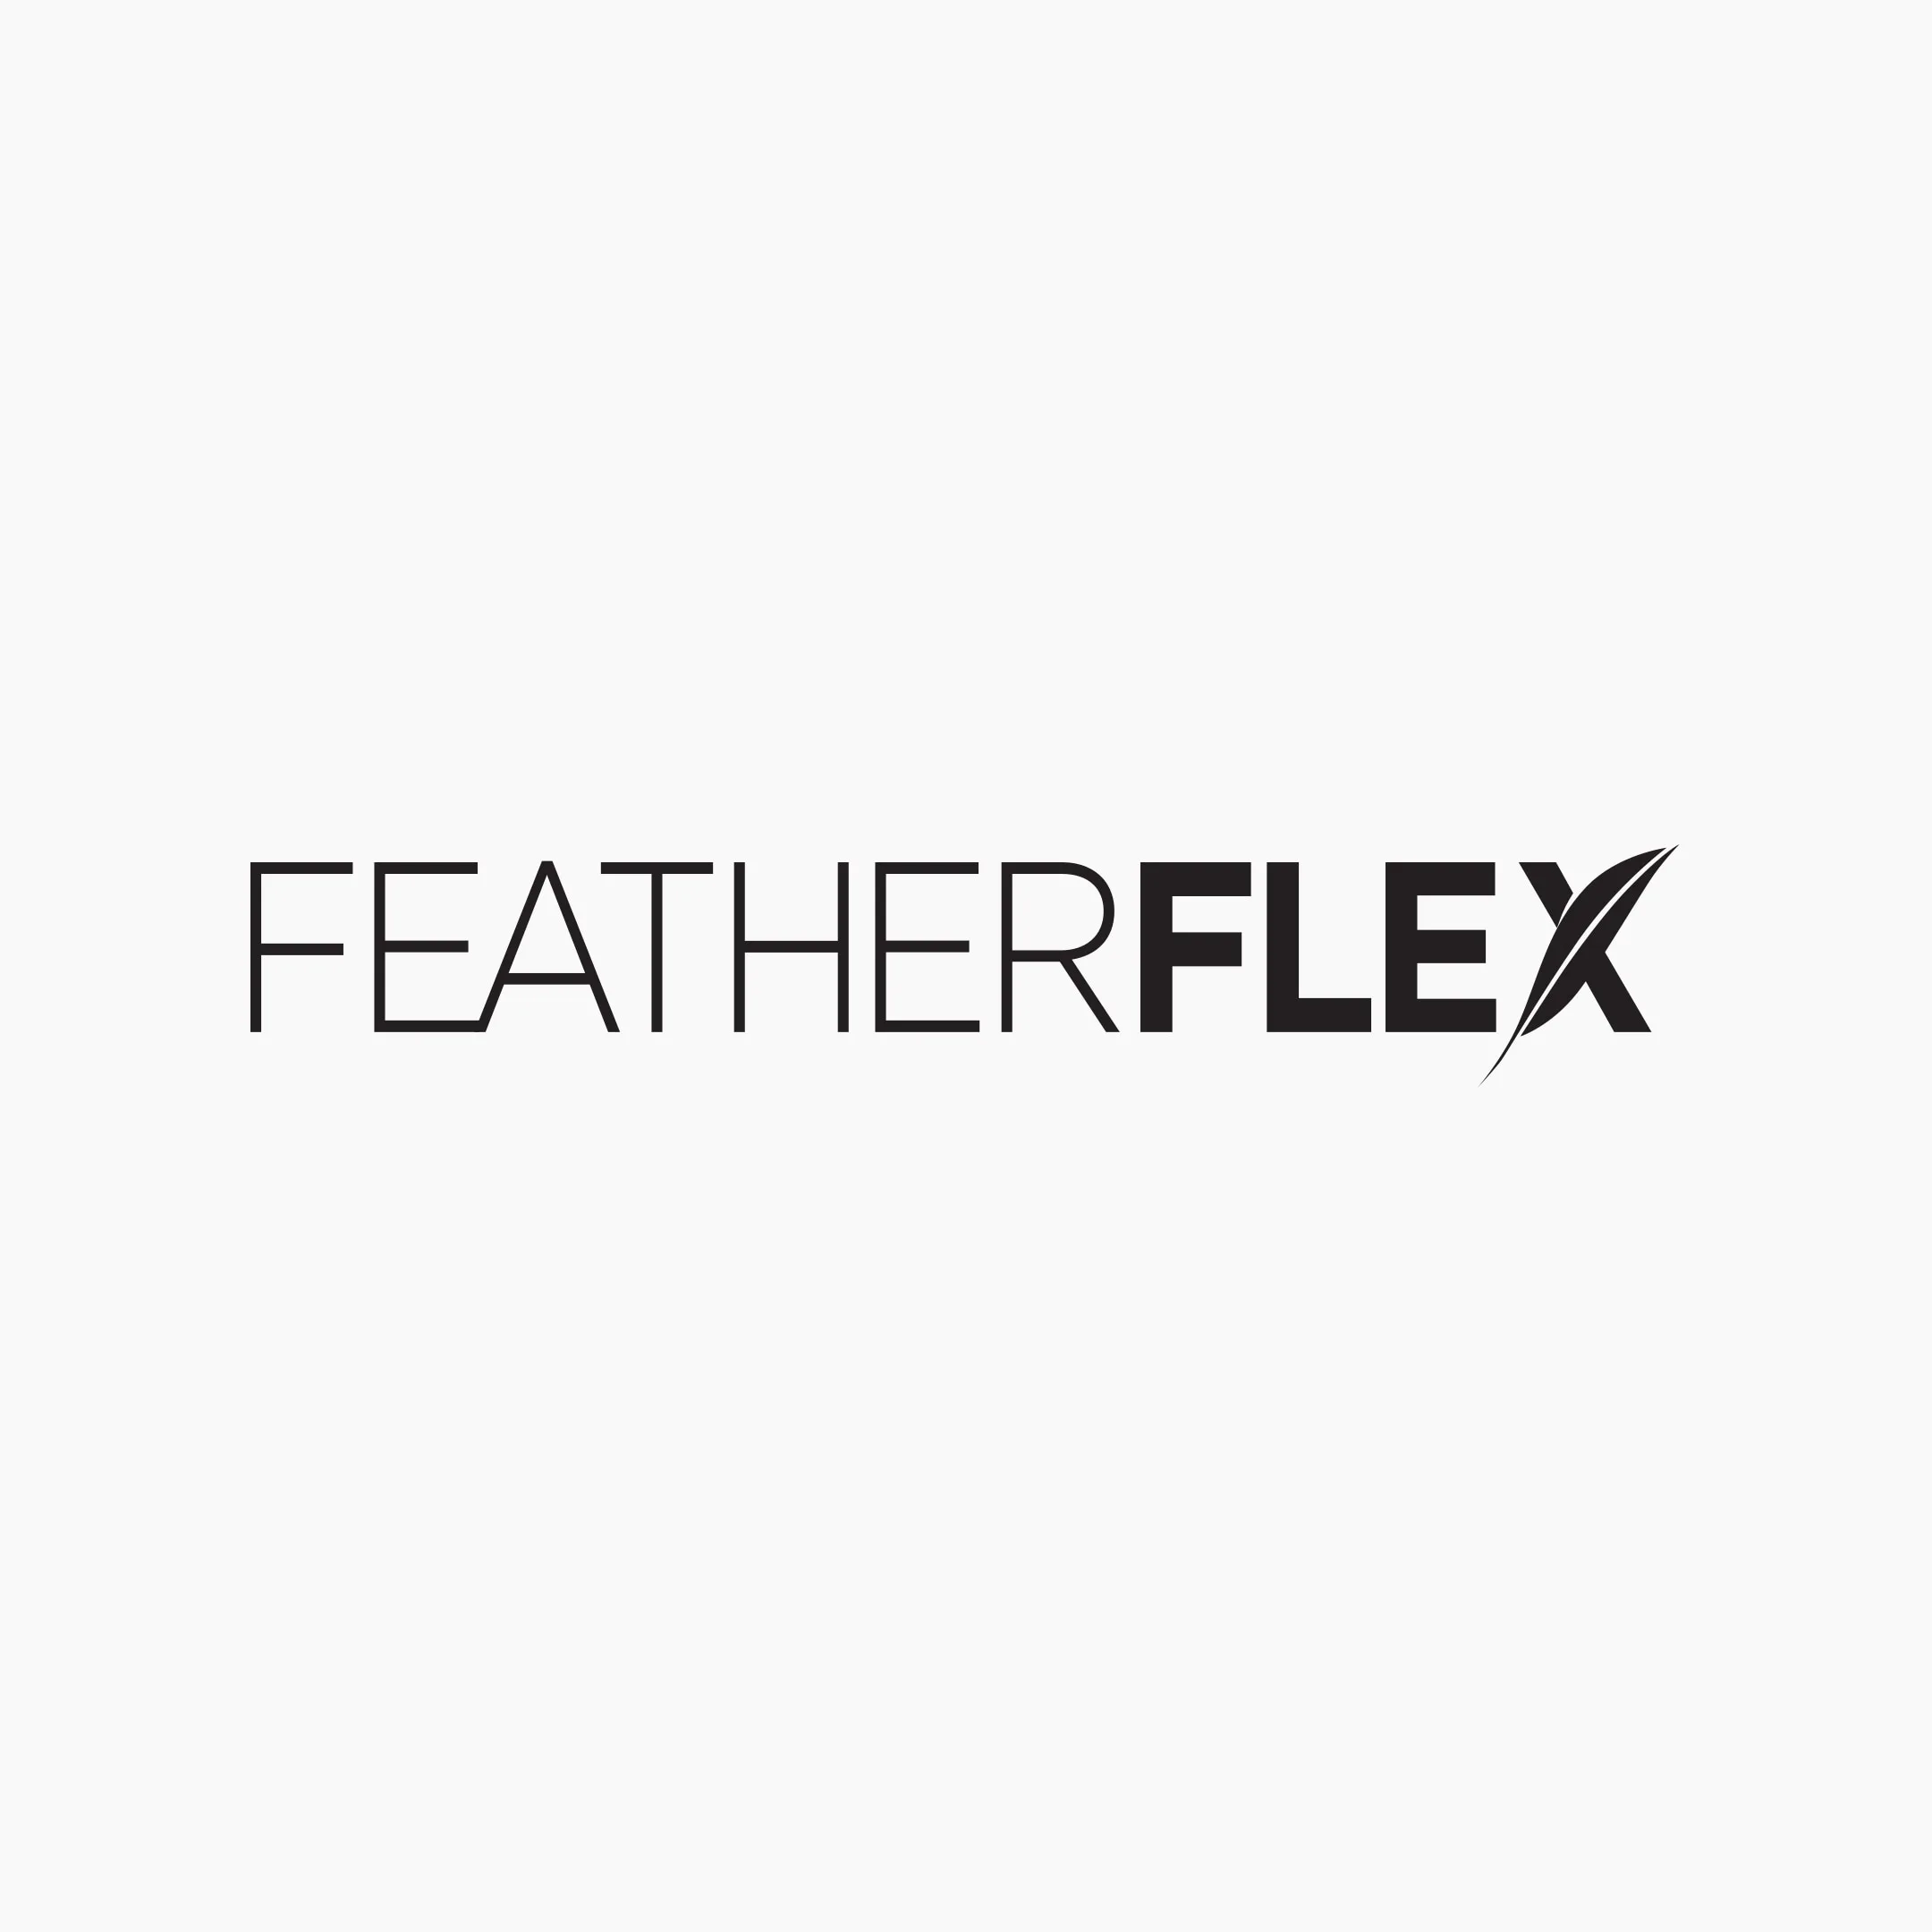 Fetherflex logo